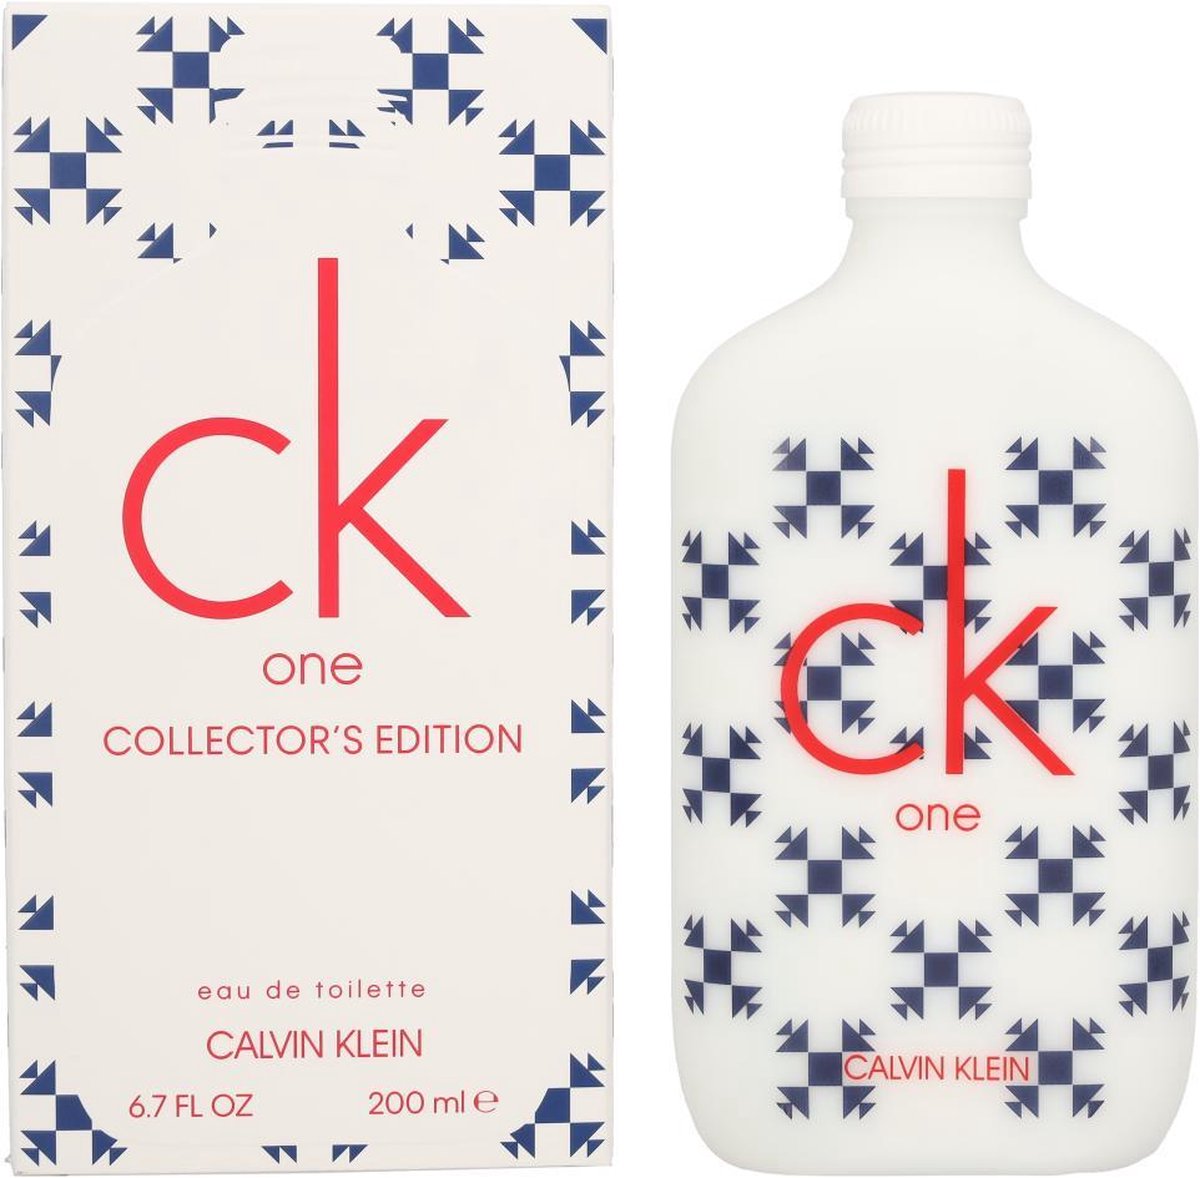 Calvin CK One Eau Toilette 200ml Spray - Collectors Edition 2019 |